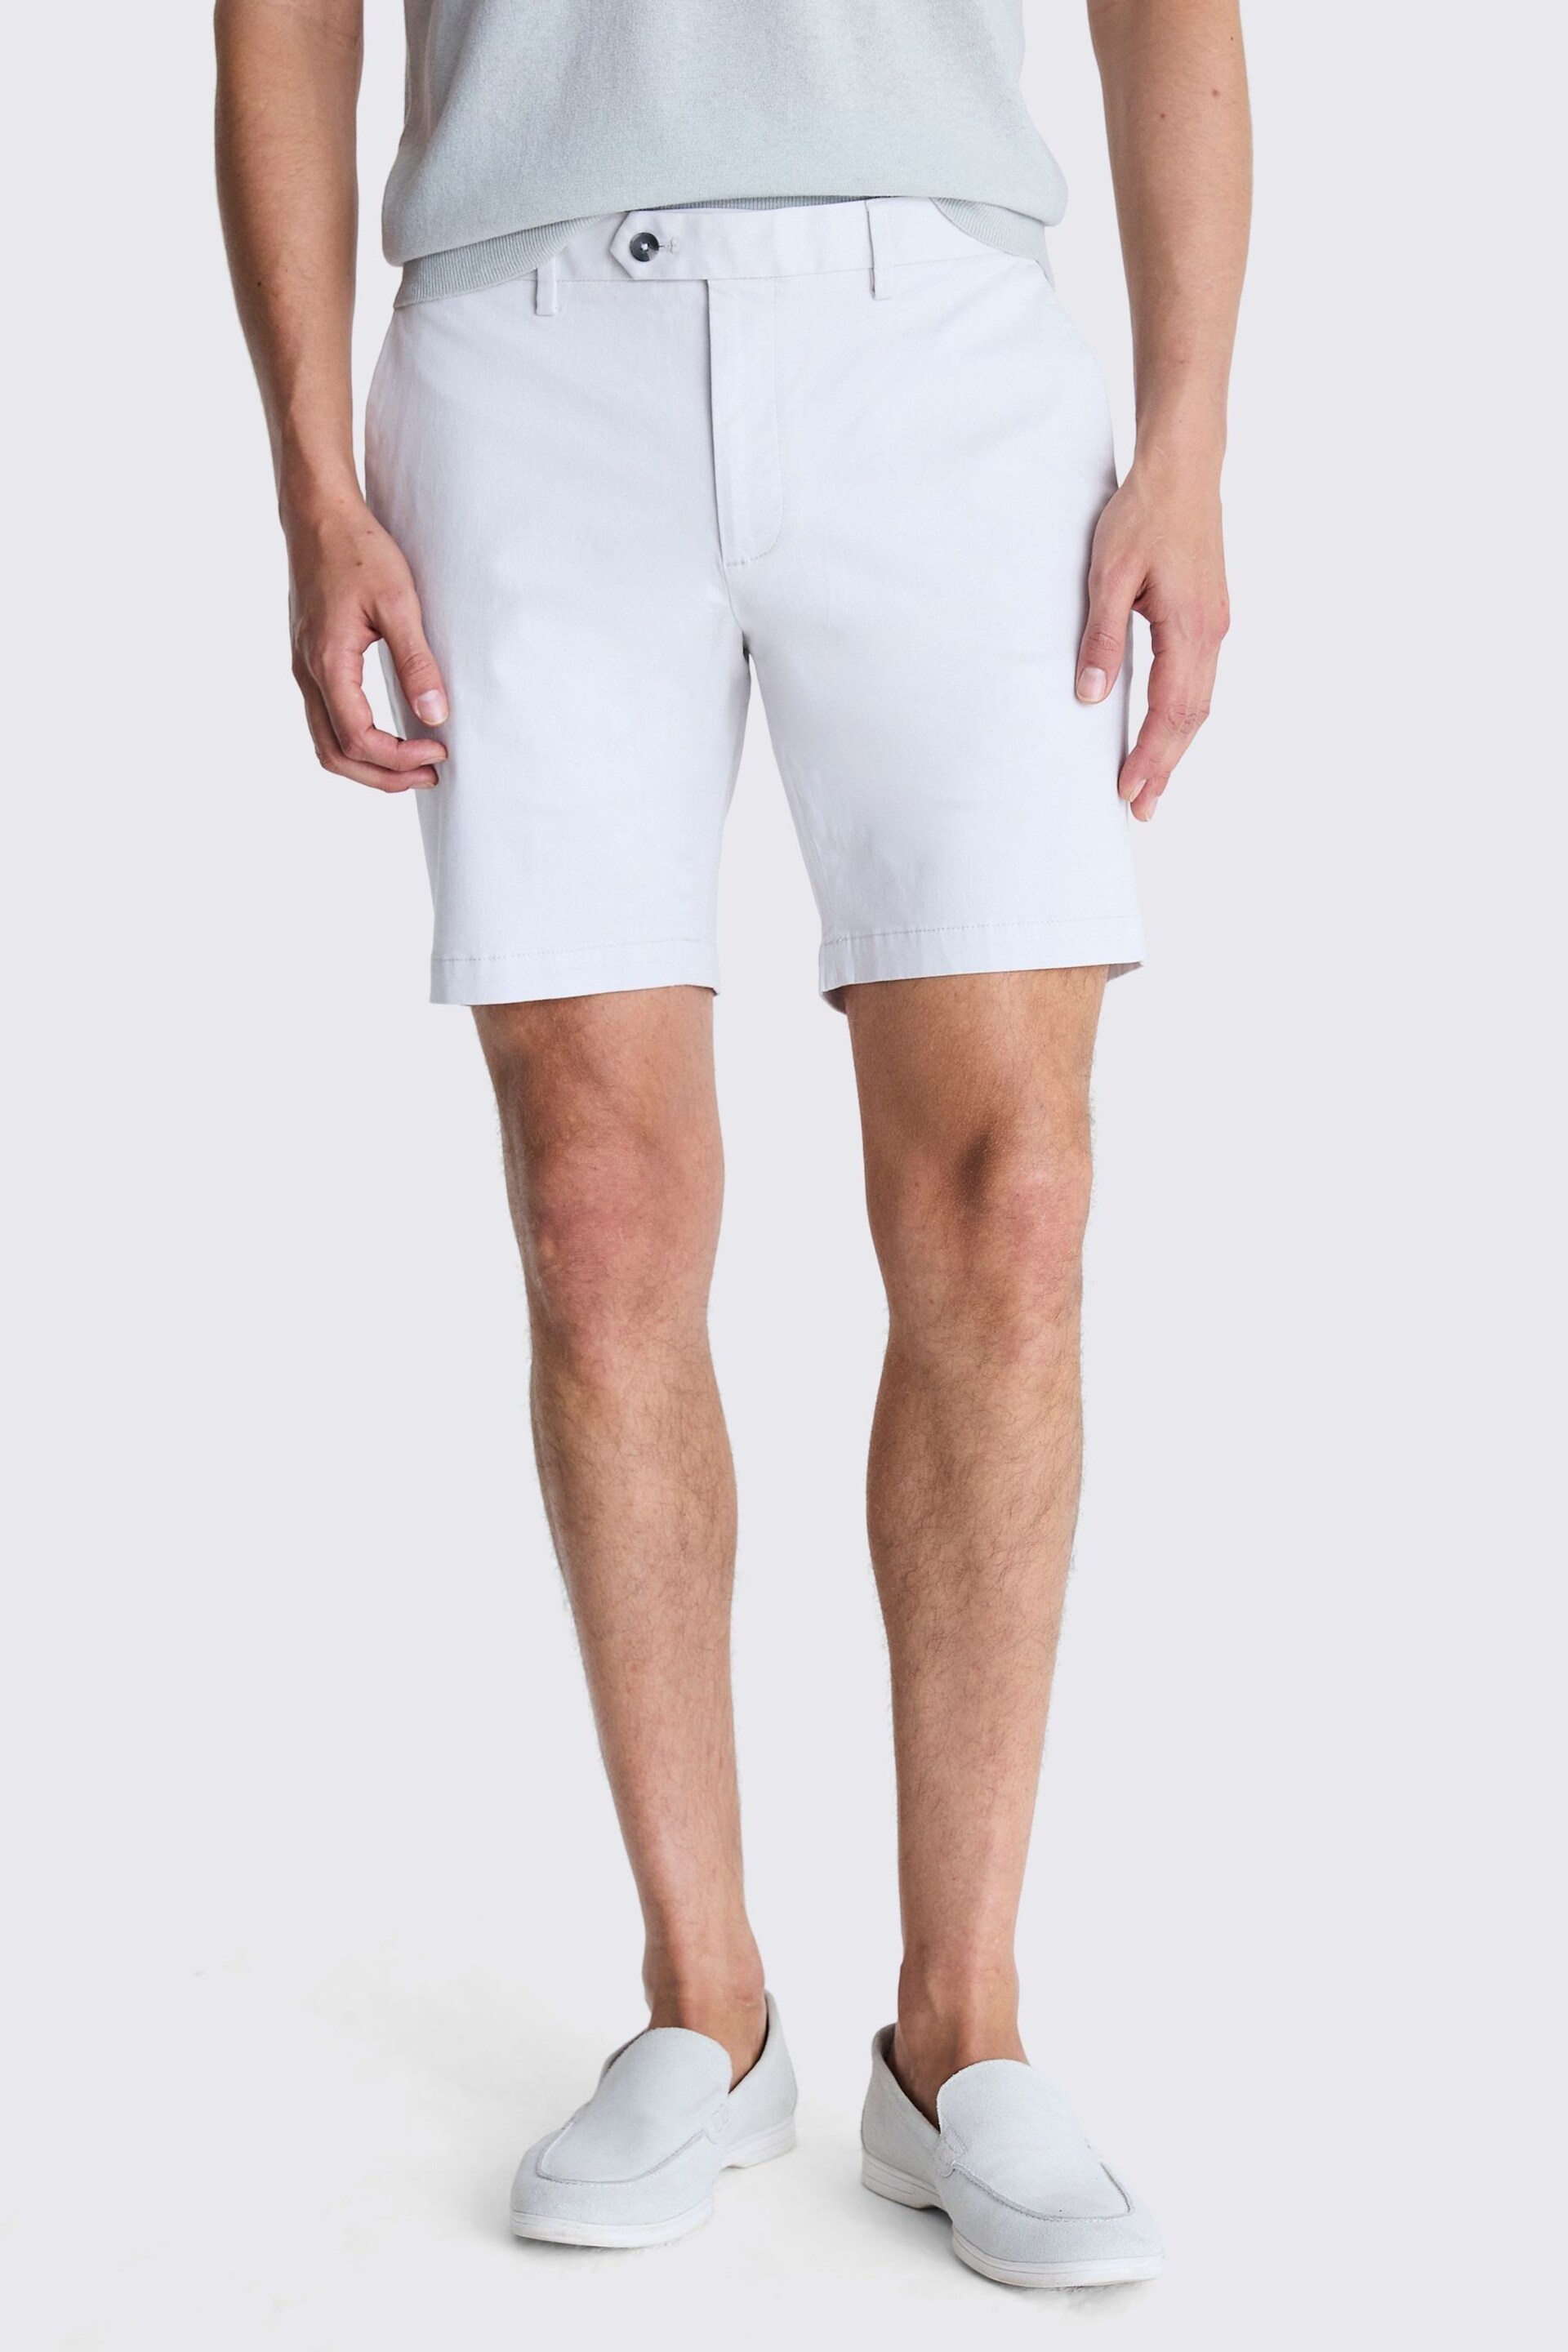 MOSS Grey Slim Fit Chino Shorts - Image 1 of 3